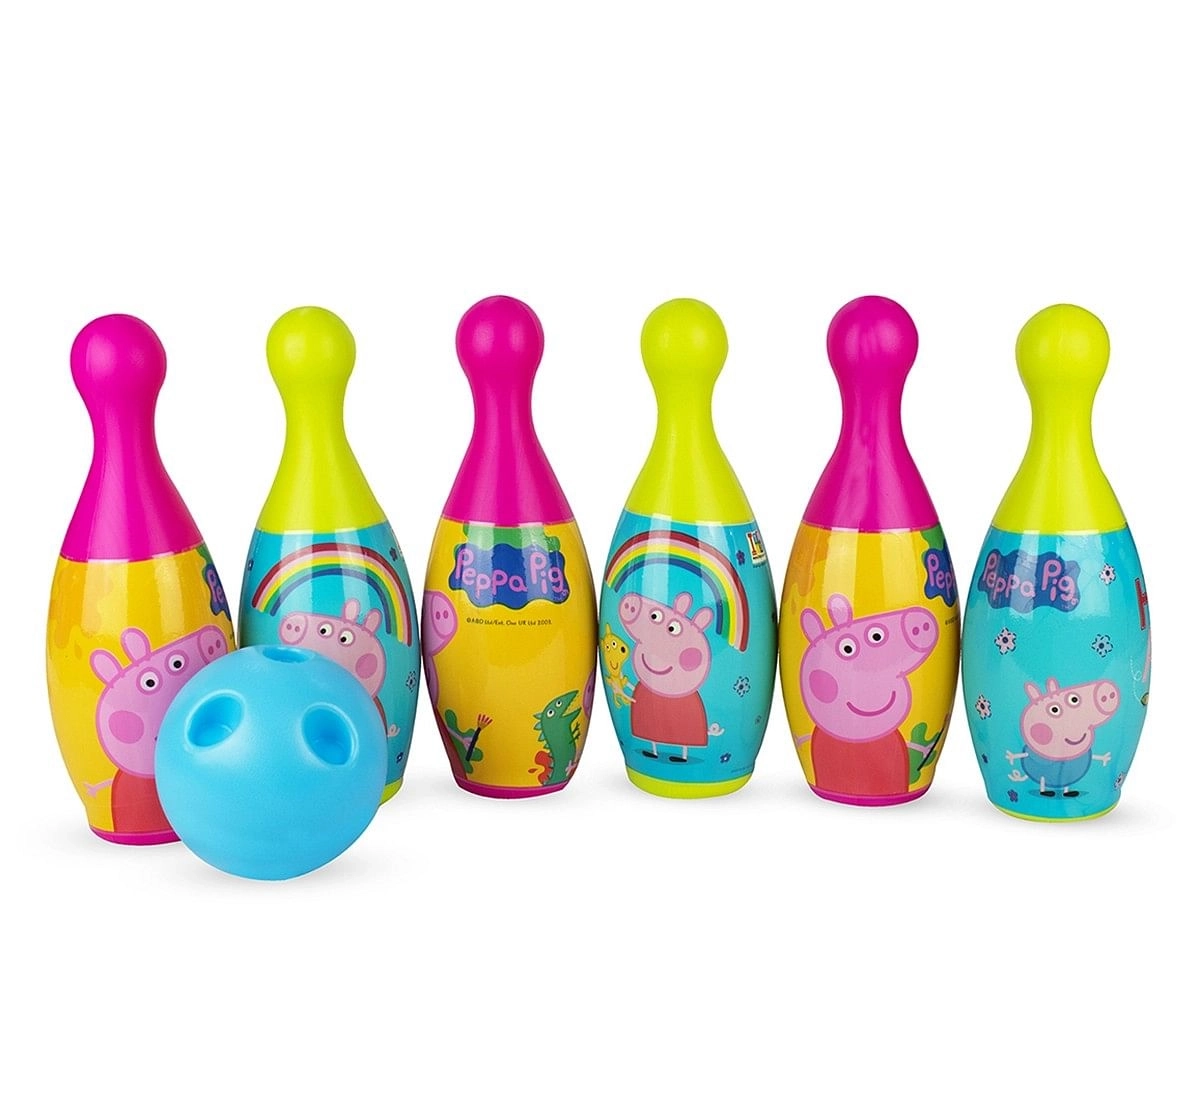 IToys Peppa pig bowling set for kids,  3Y+(Multicolour)